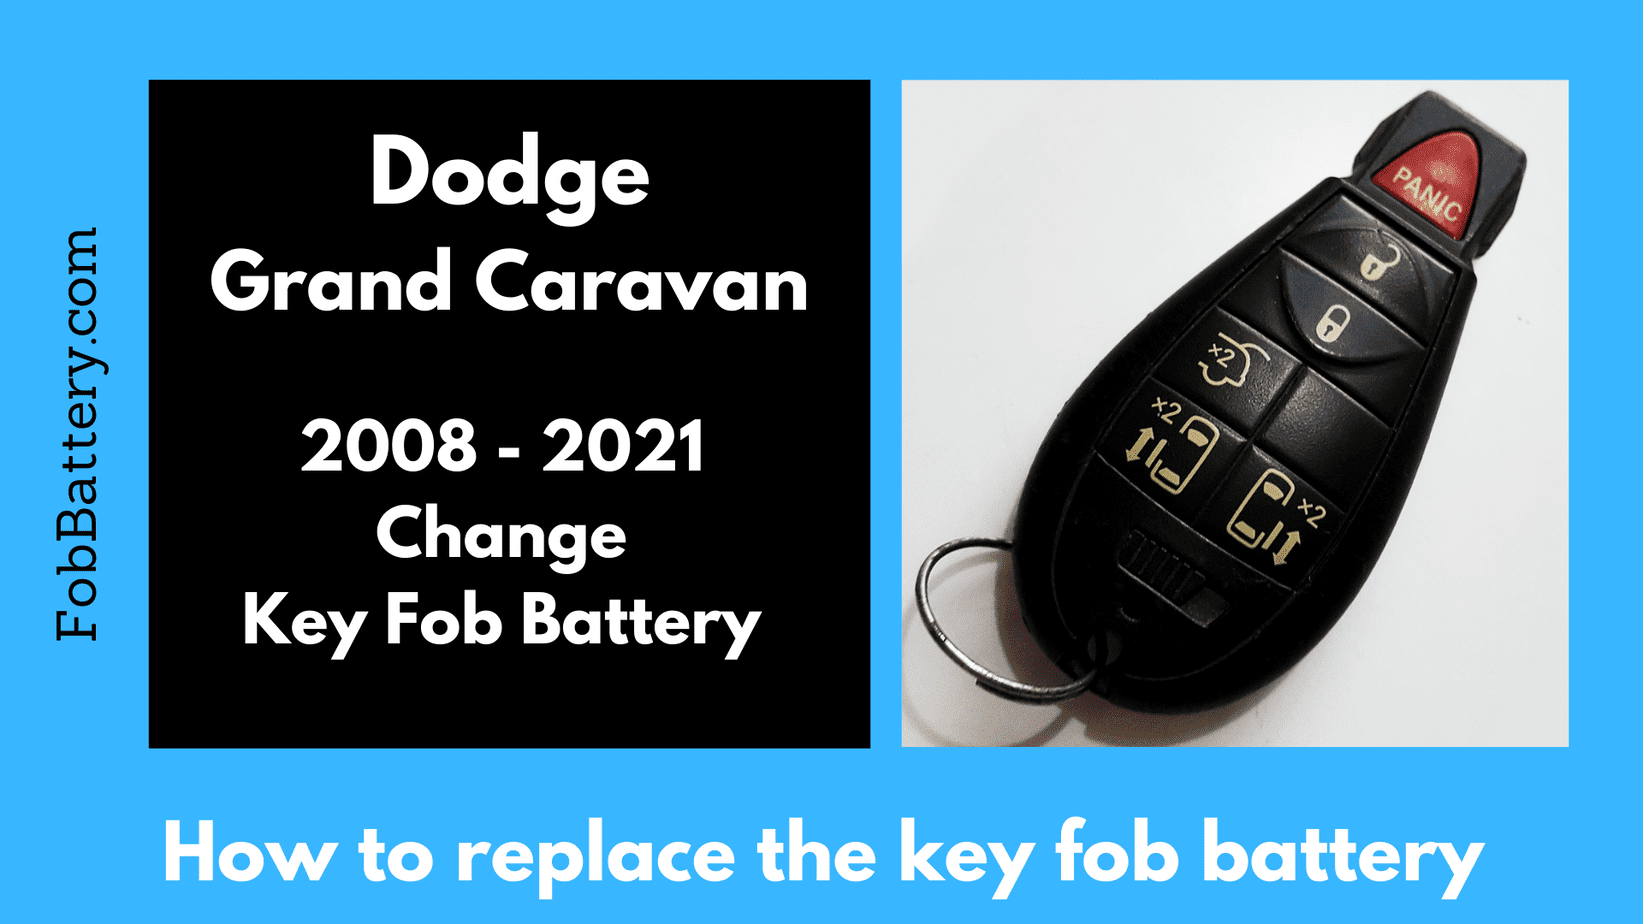 Dodge grand caravan key fob battery replacement